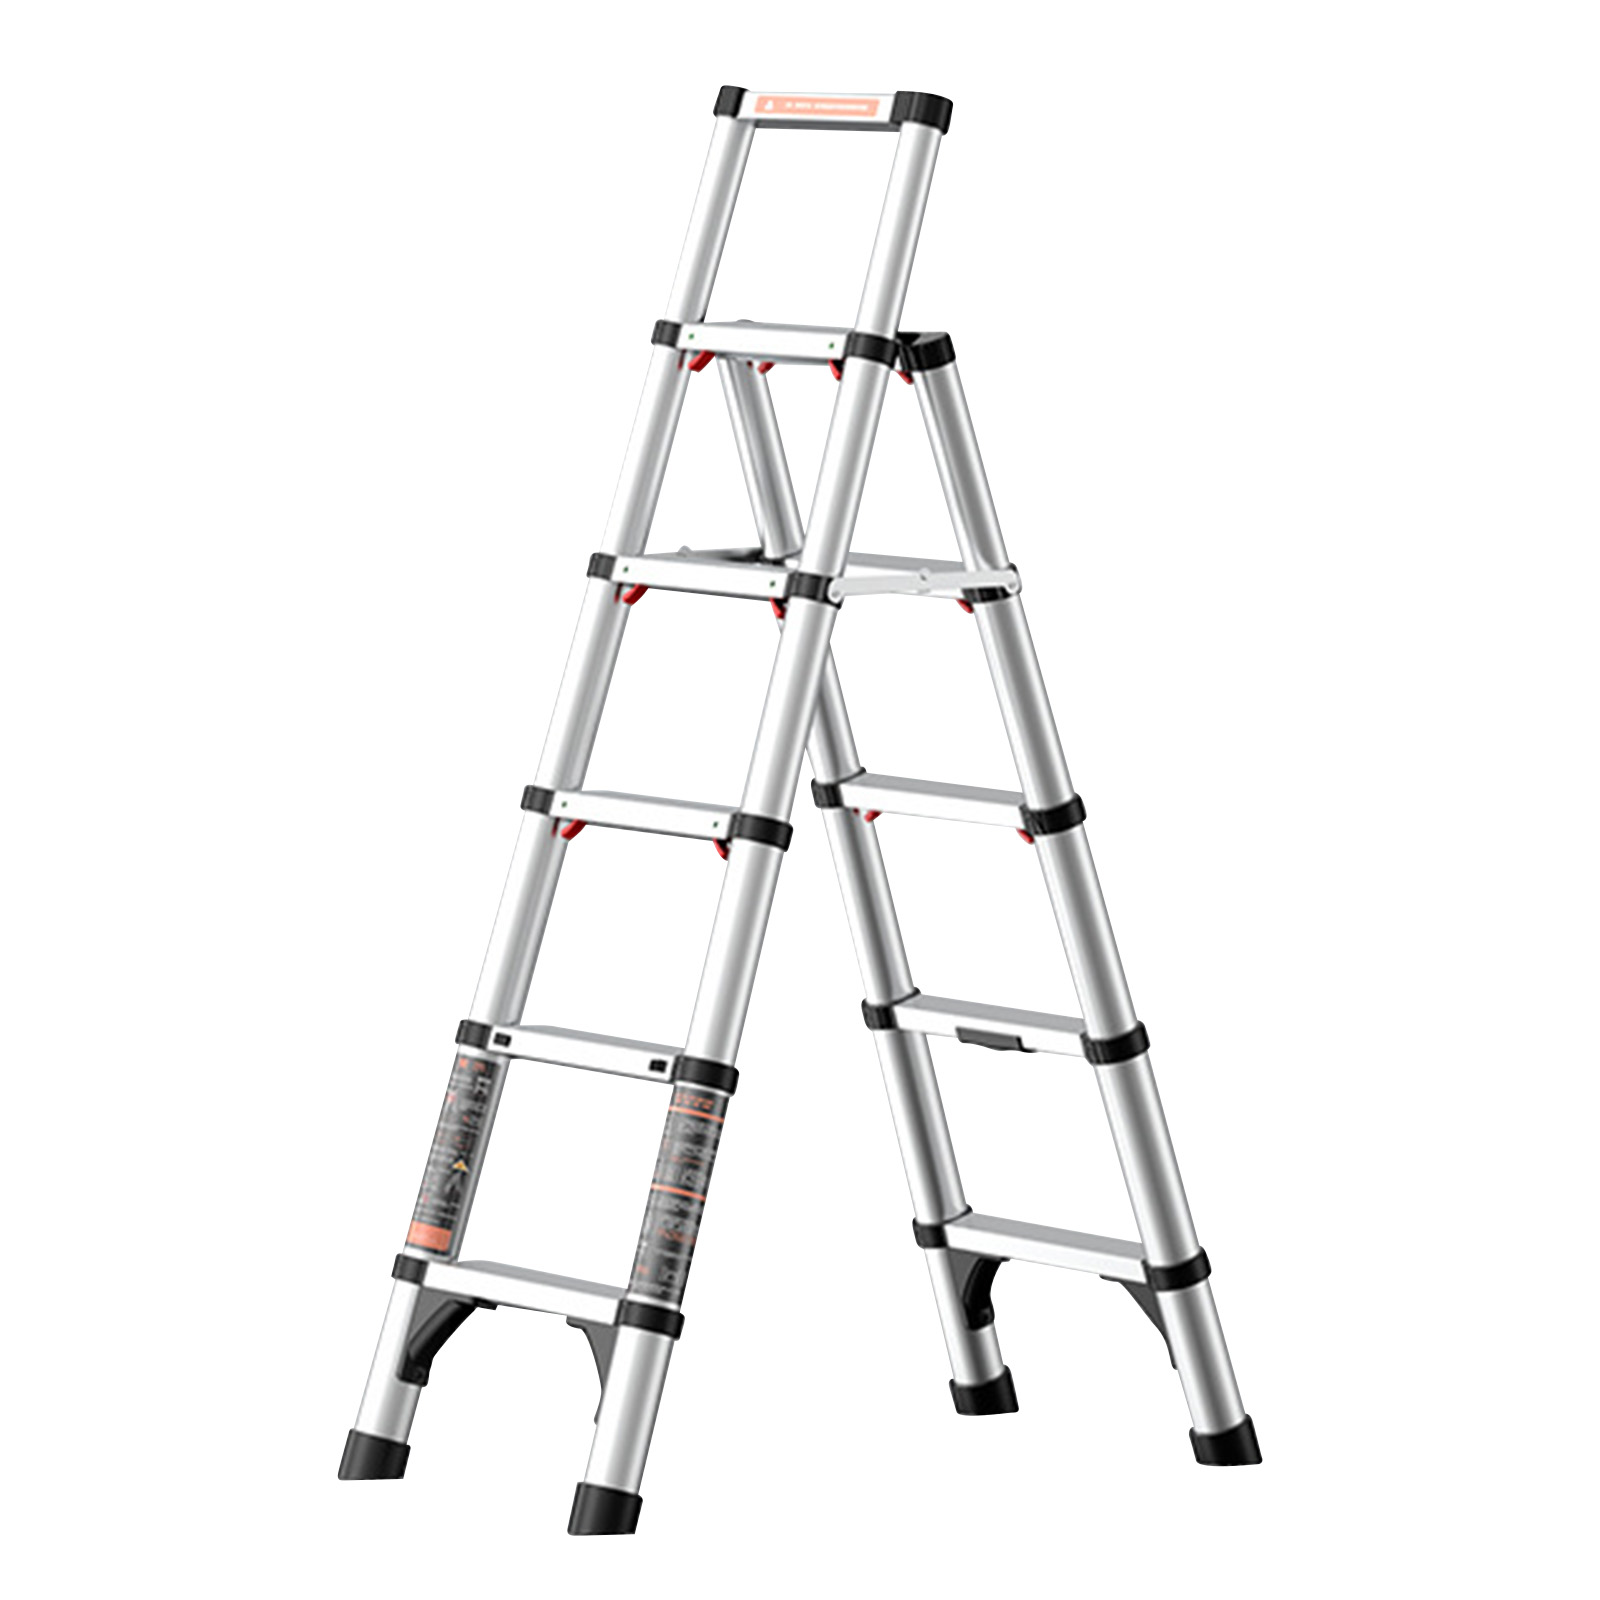 Silver five-step ladder